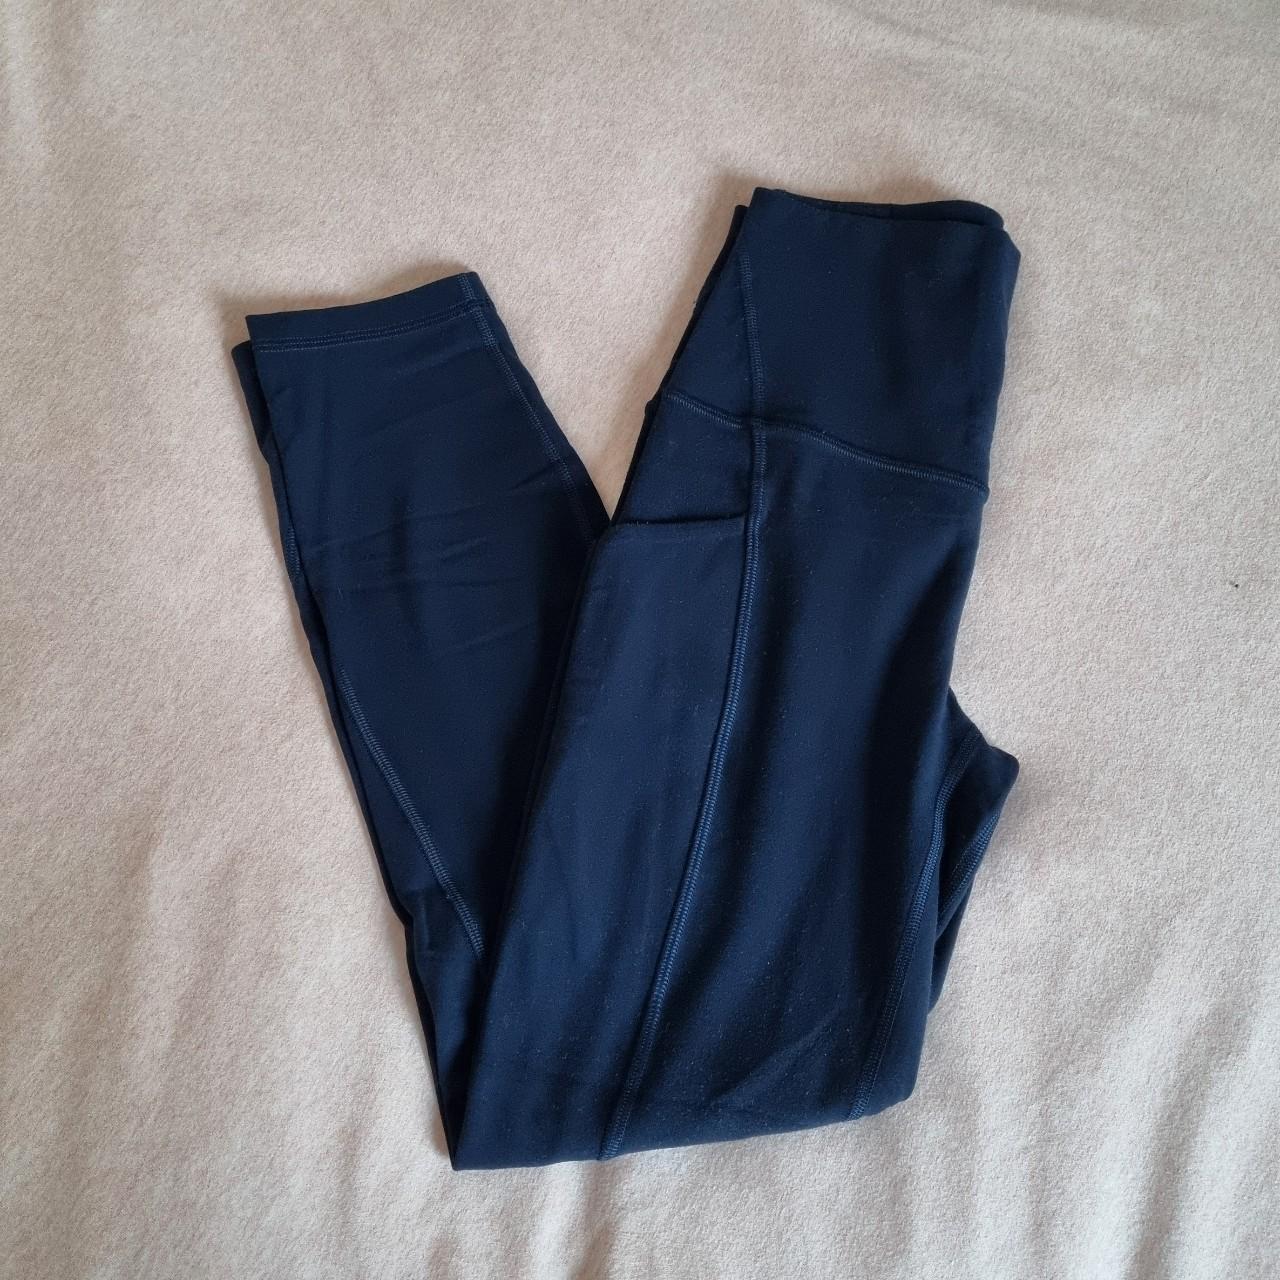 23” cropped lululemon size 2 align leggings. worn a - Depop